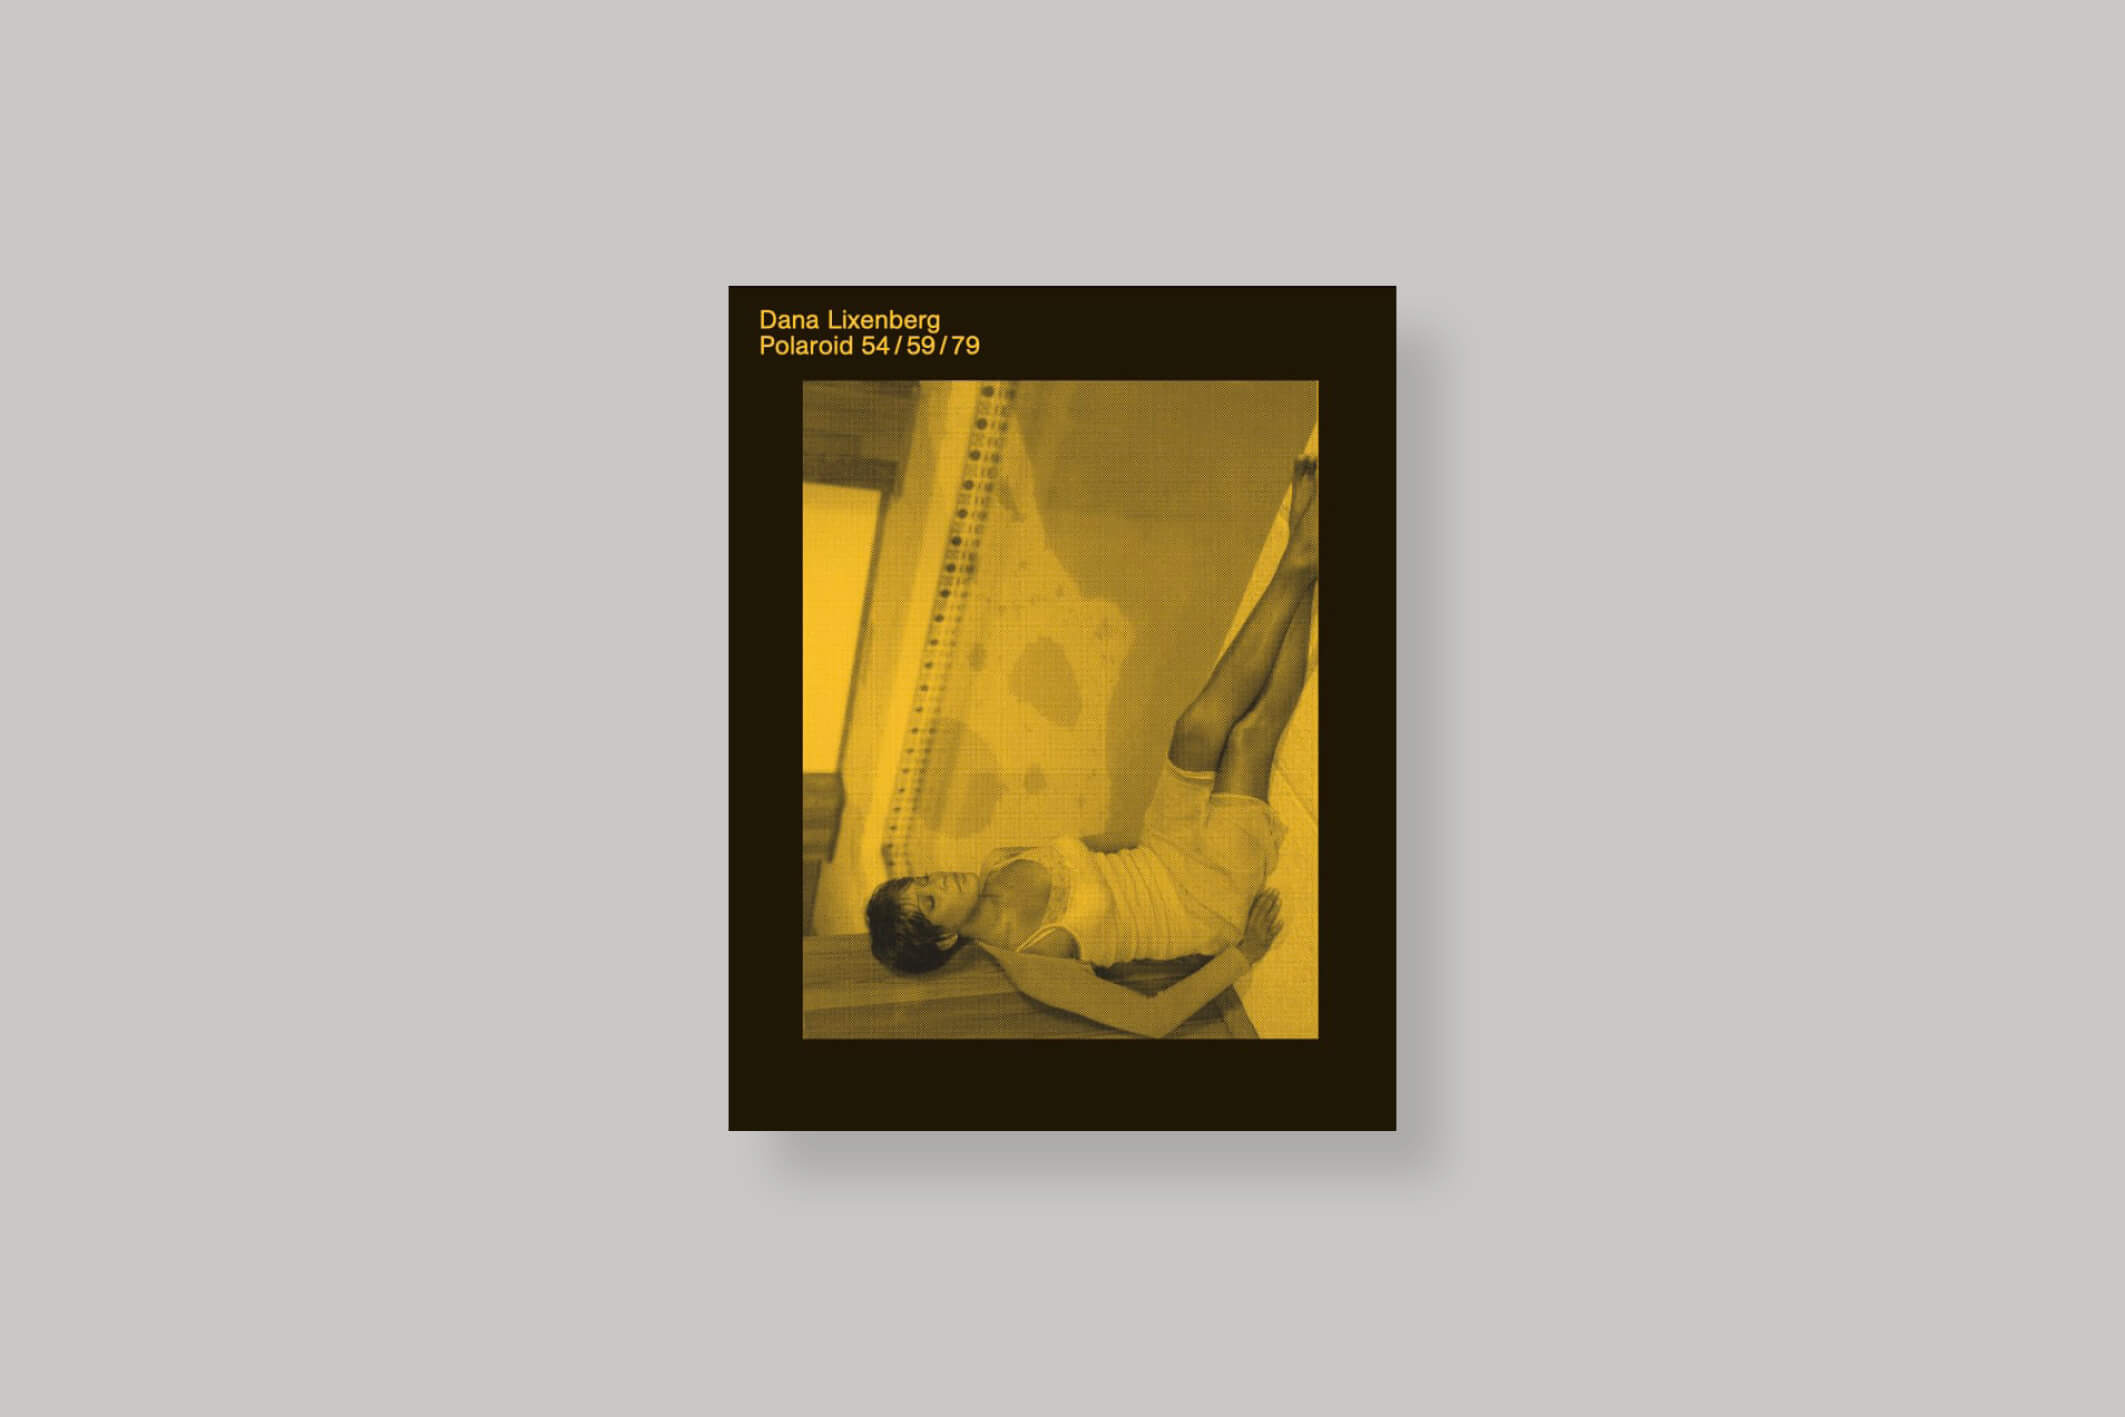 Polaroid-dana-lixenberg-roma-publications-cover